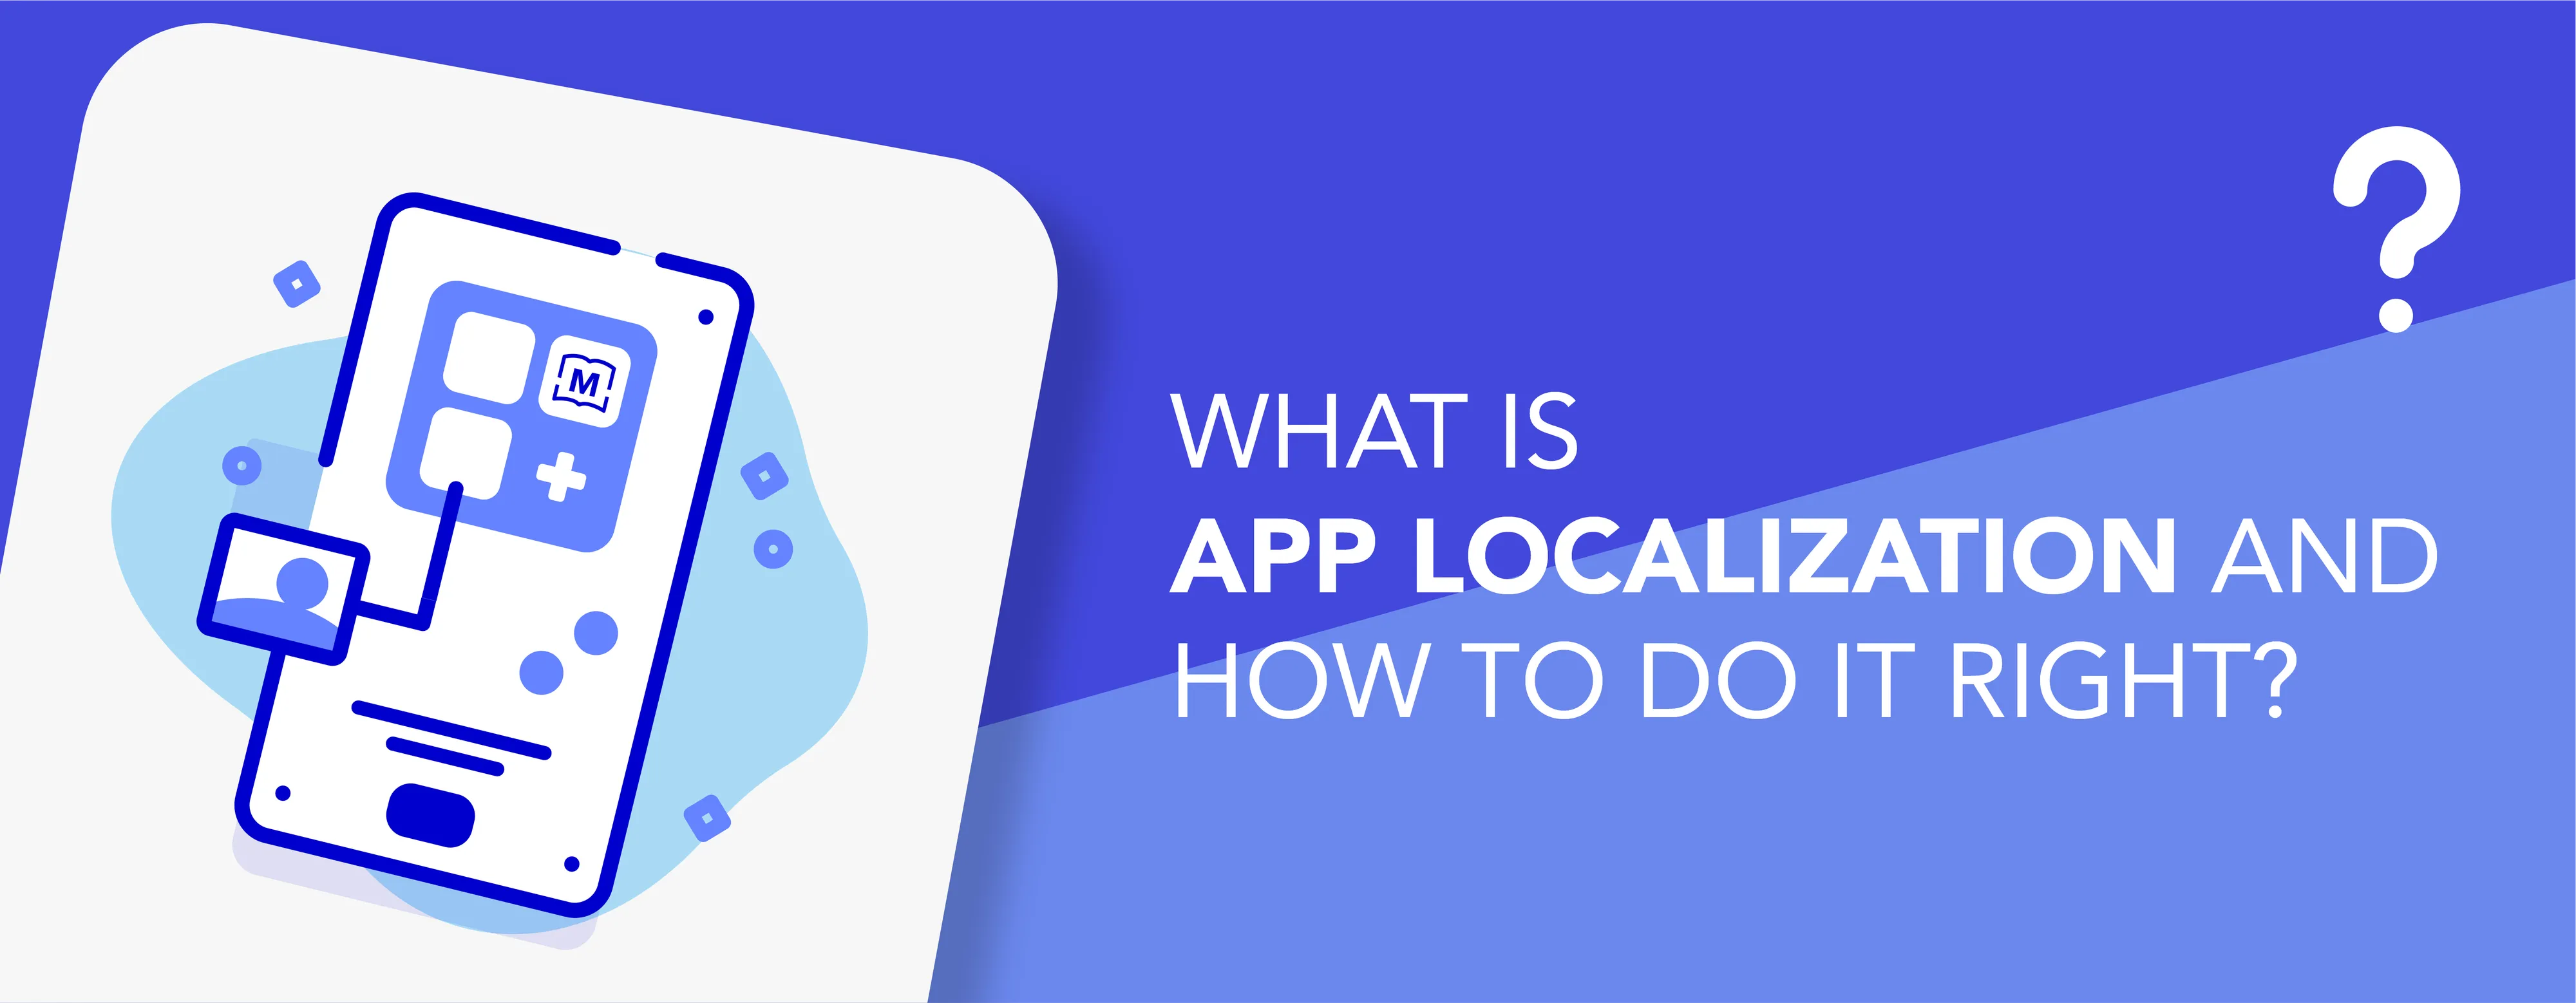 app localization tips 